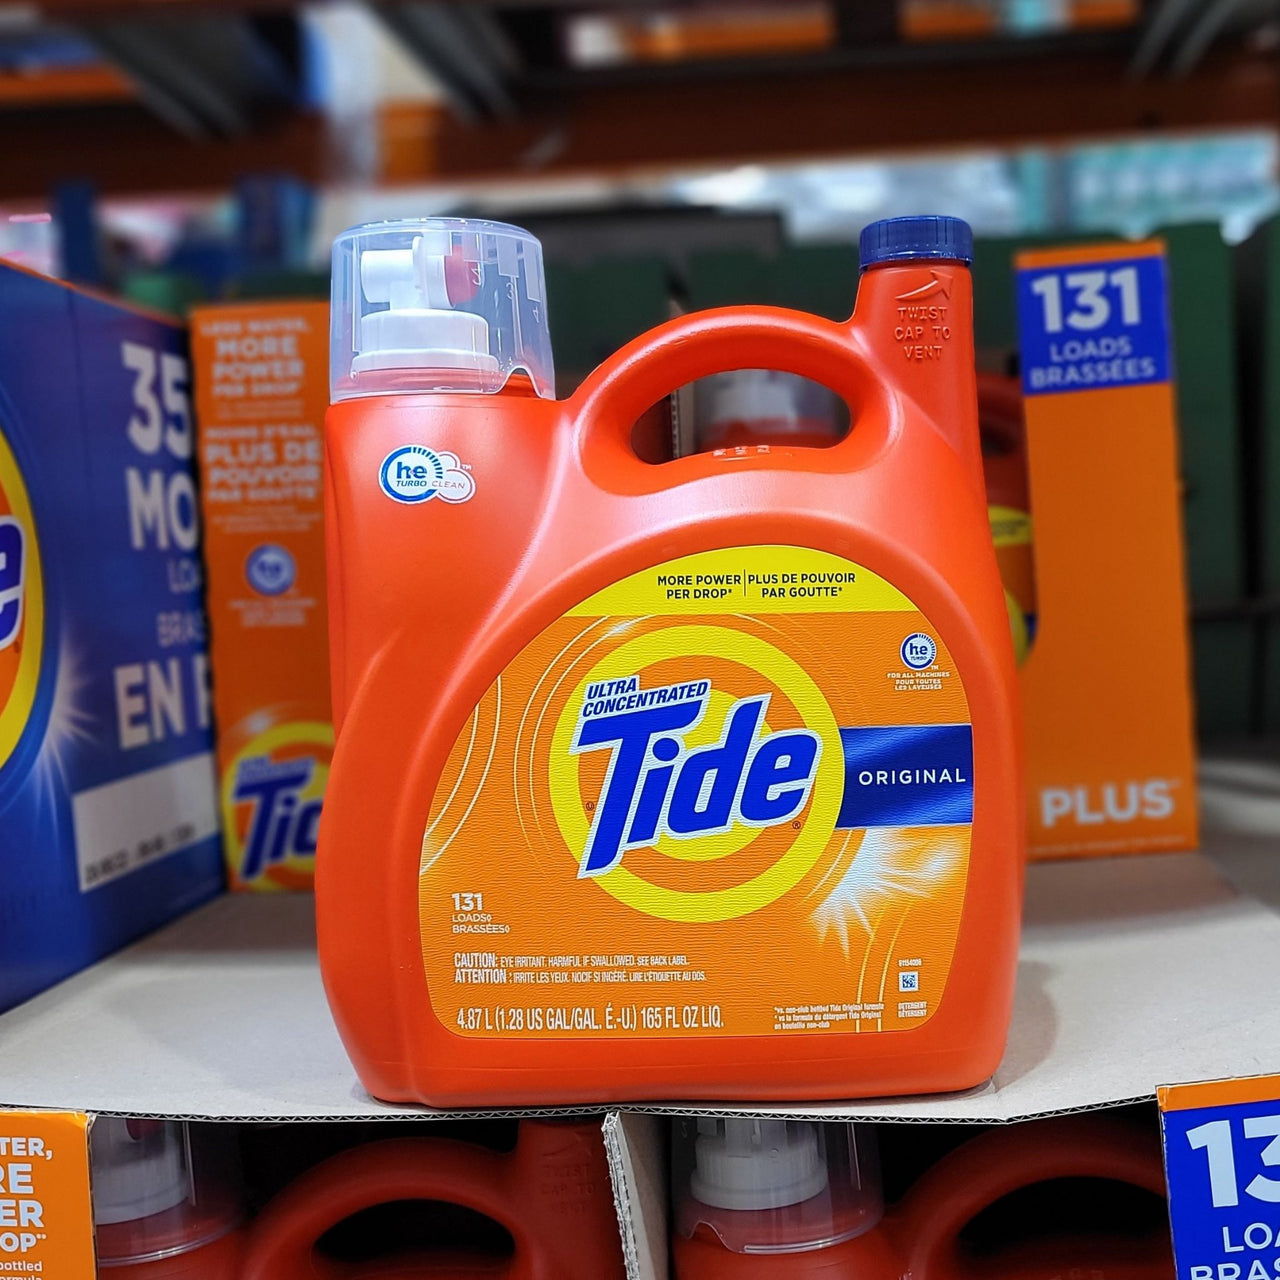 Image of Tide Liquid Detergent, 131 Wash Loads, 4.87L